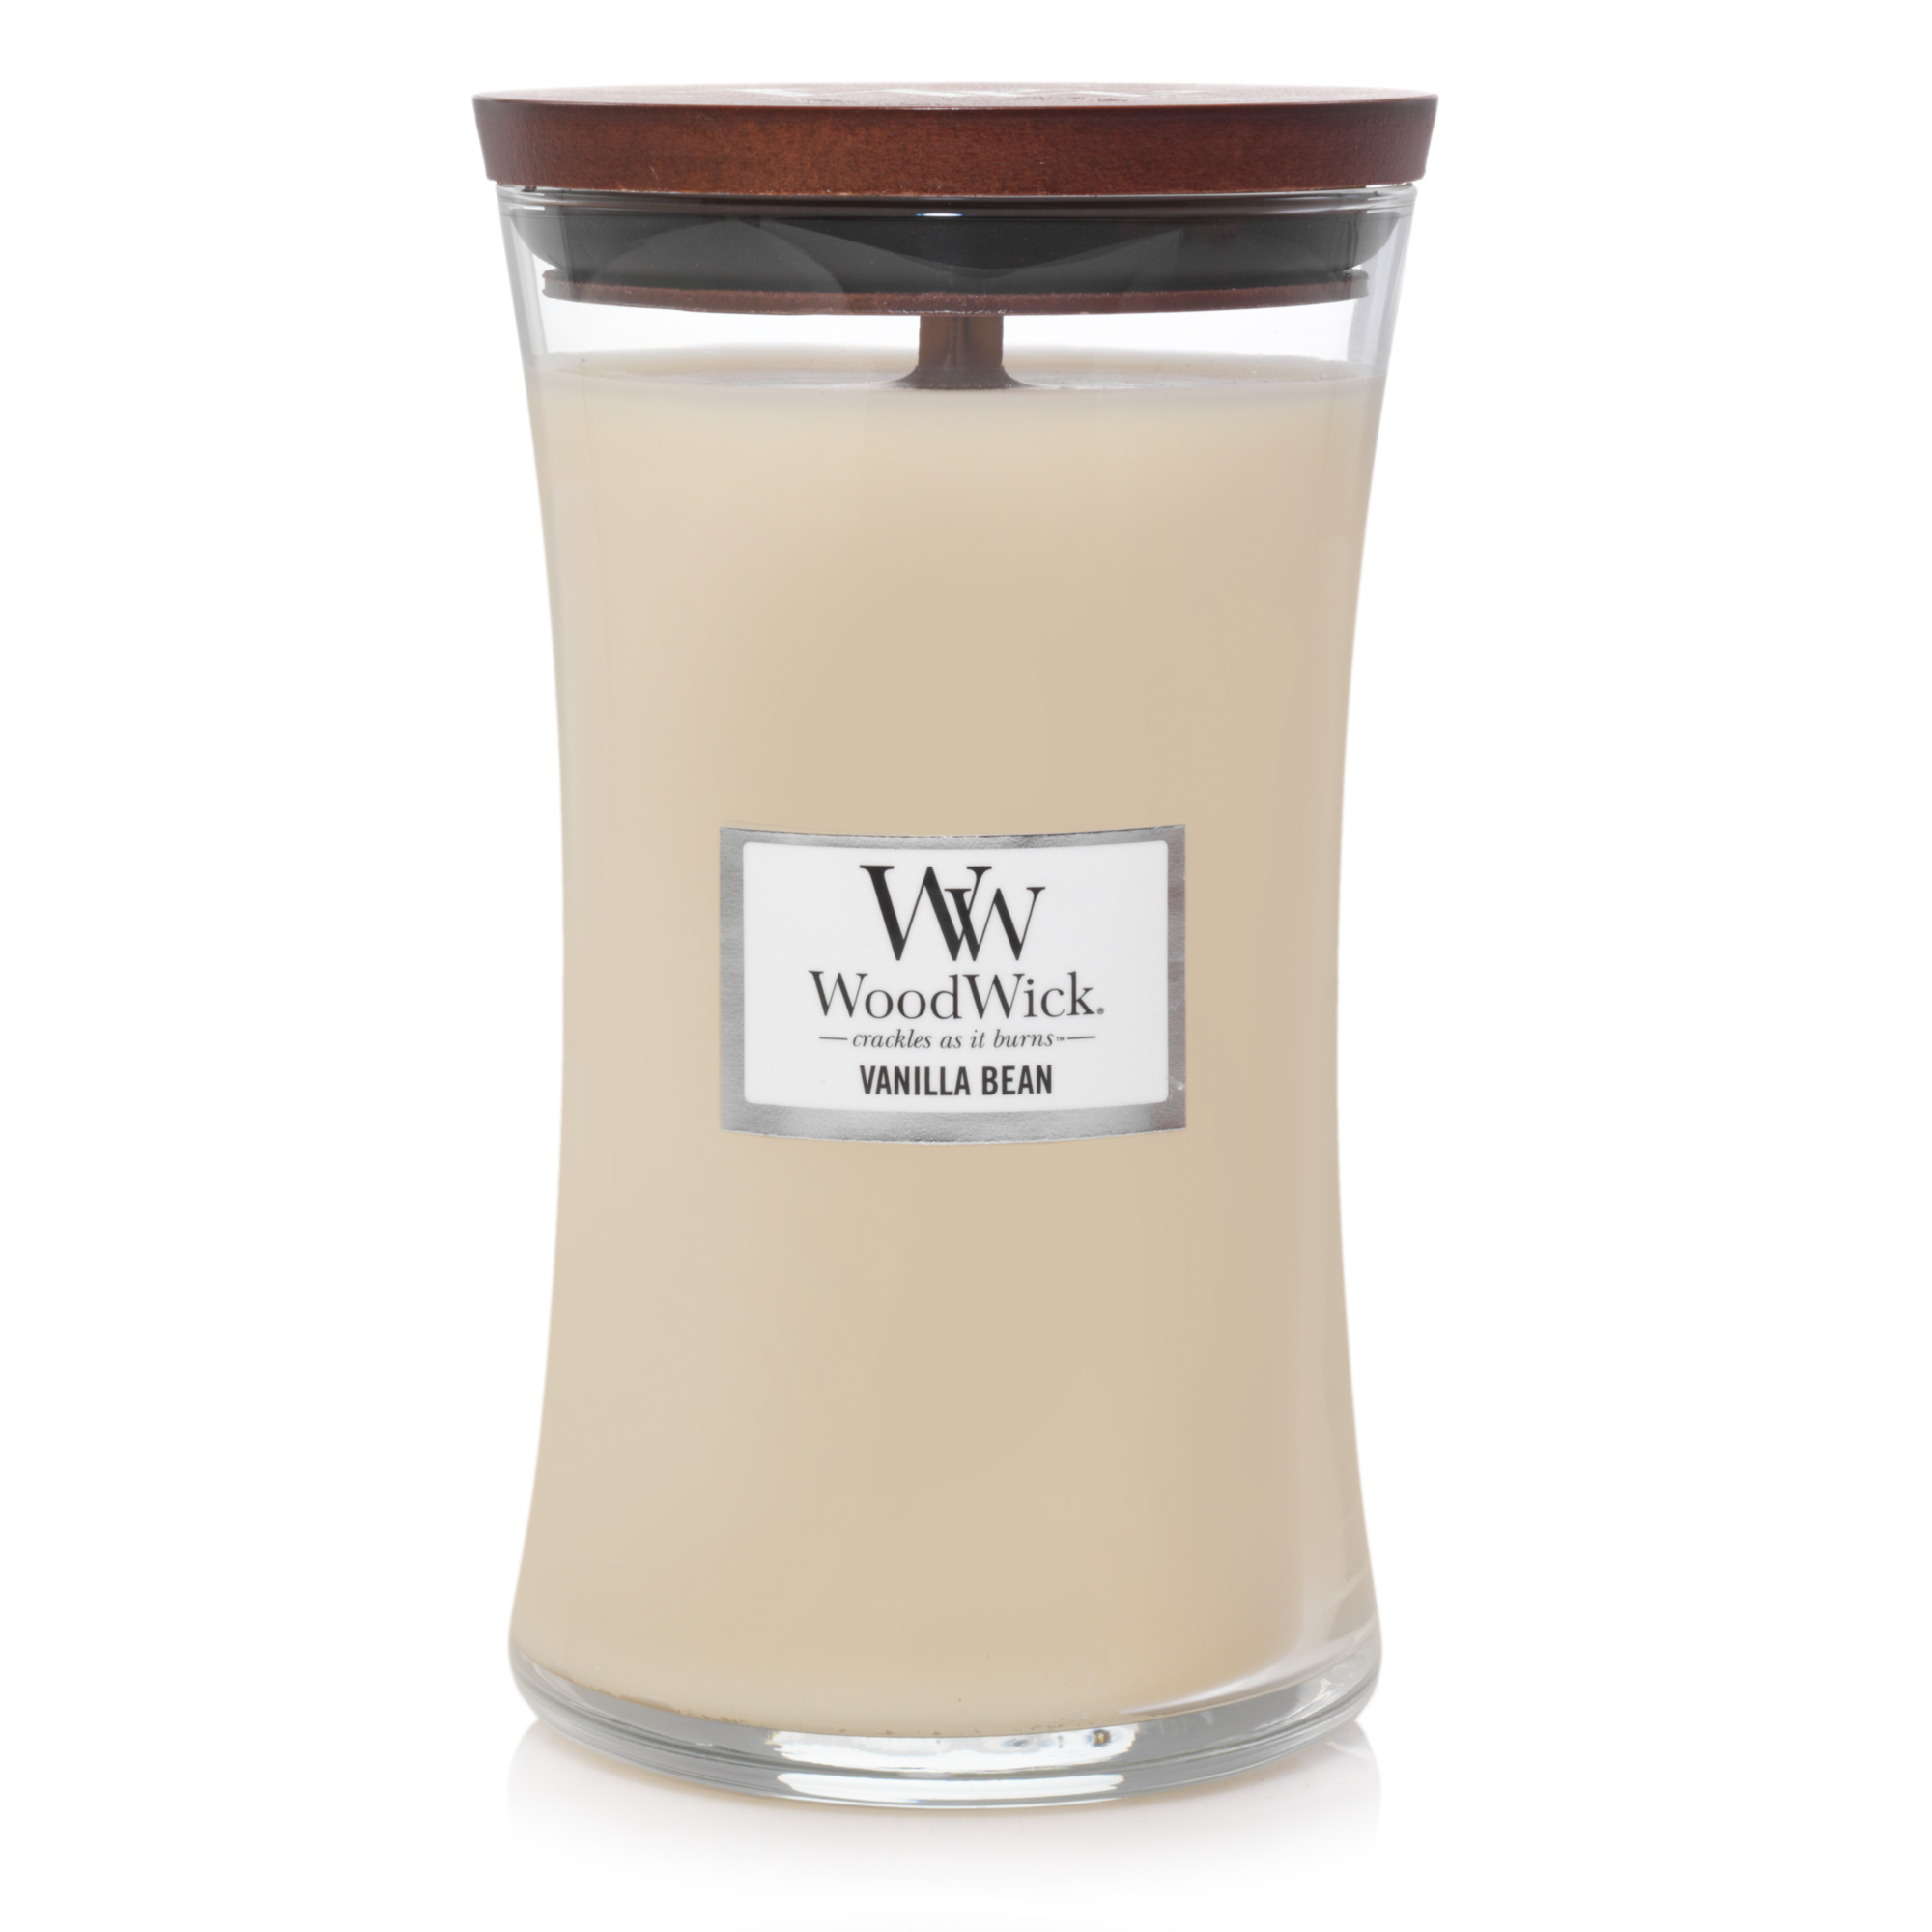 WoodWick Vanilla Bean - 22 oz. Candle - image 1 of 6